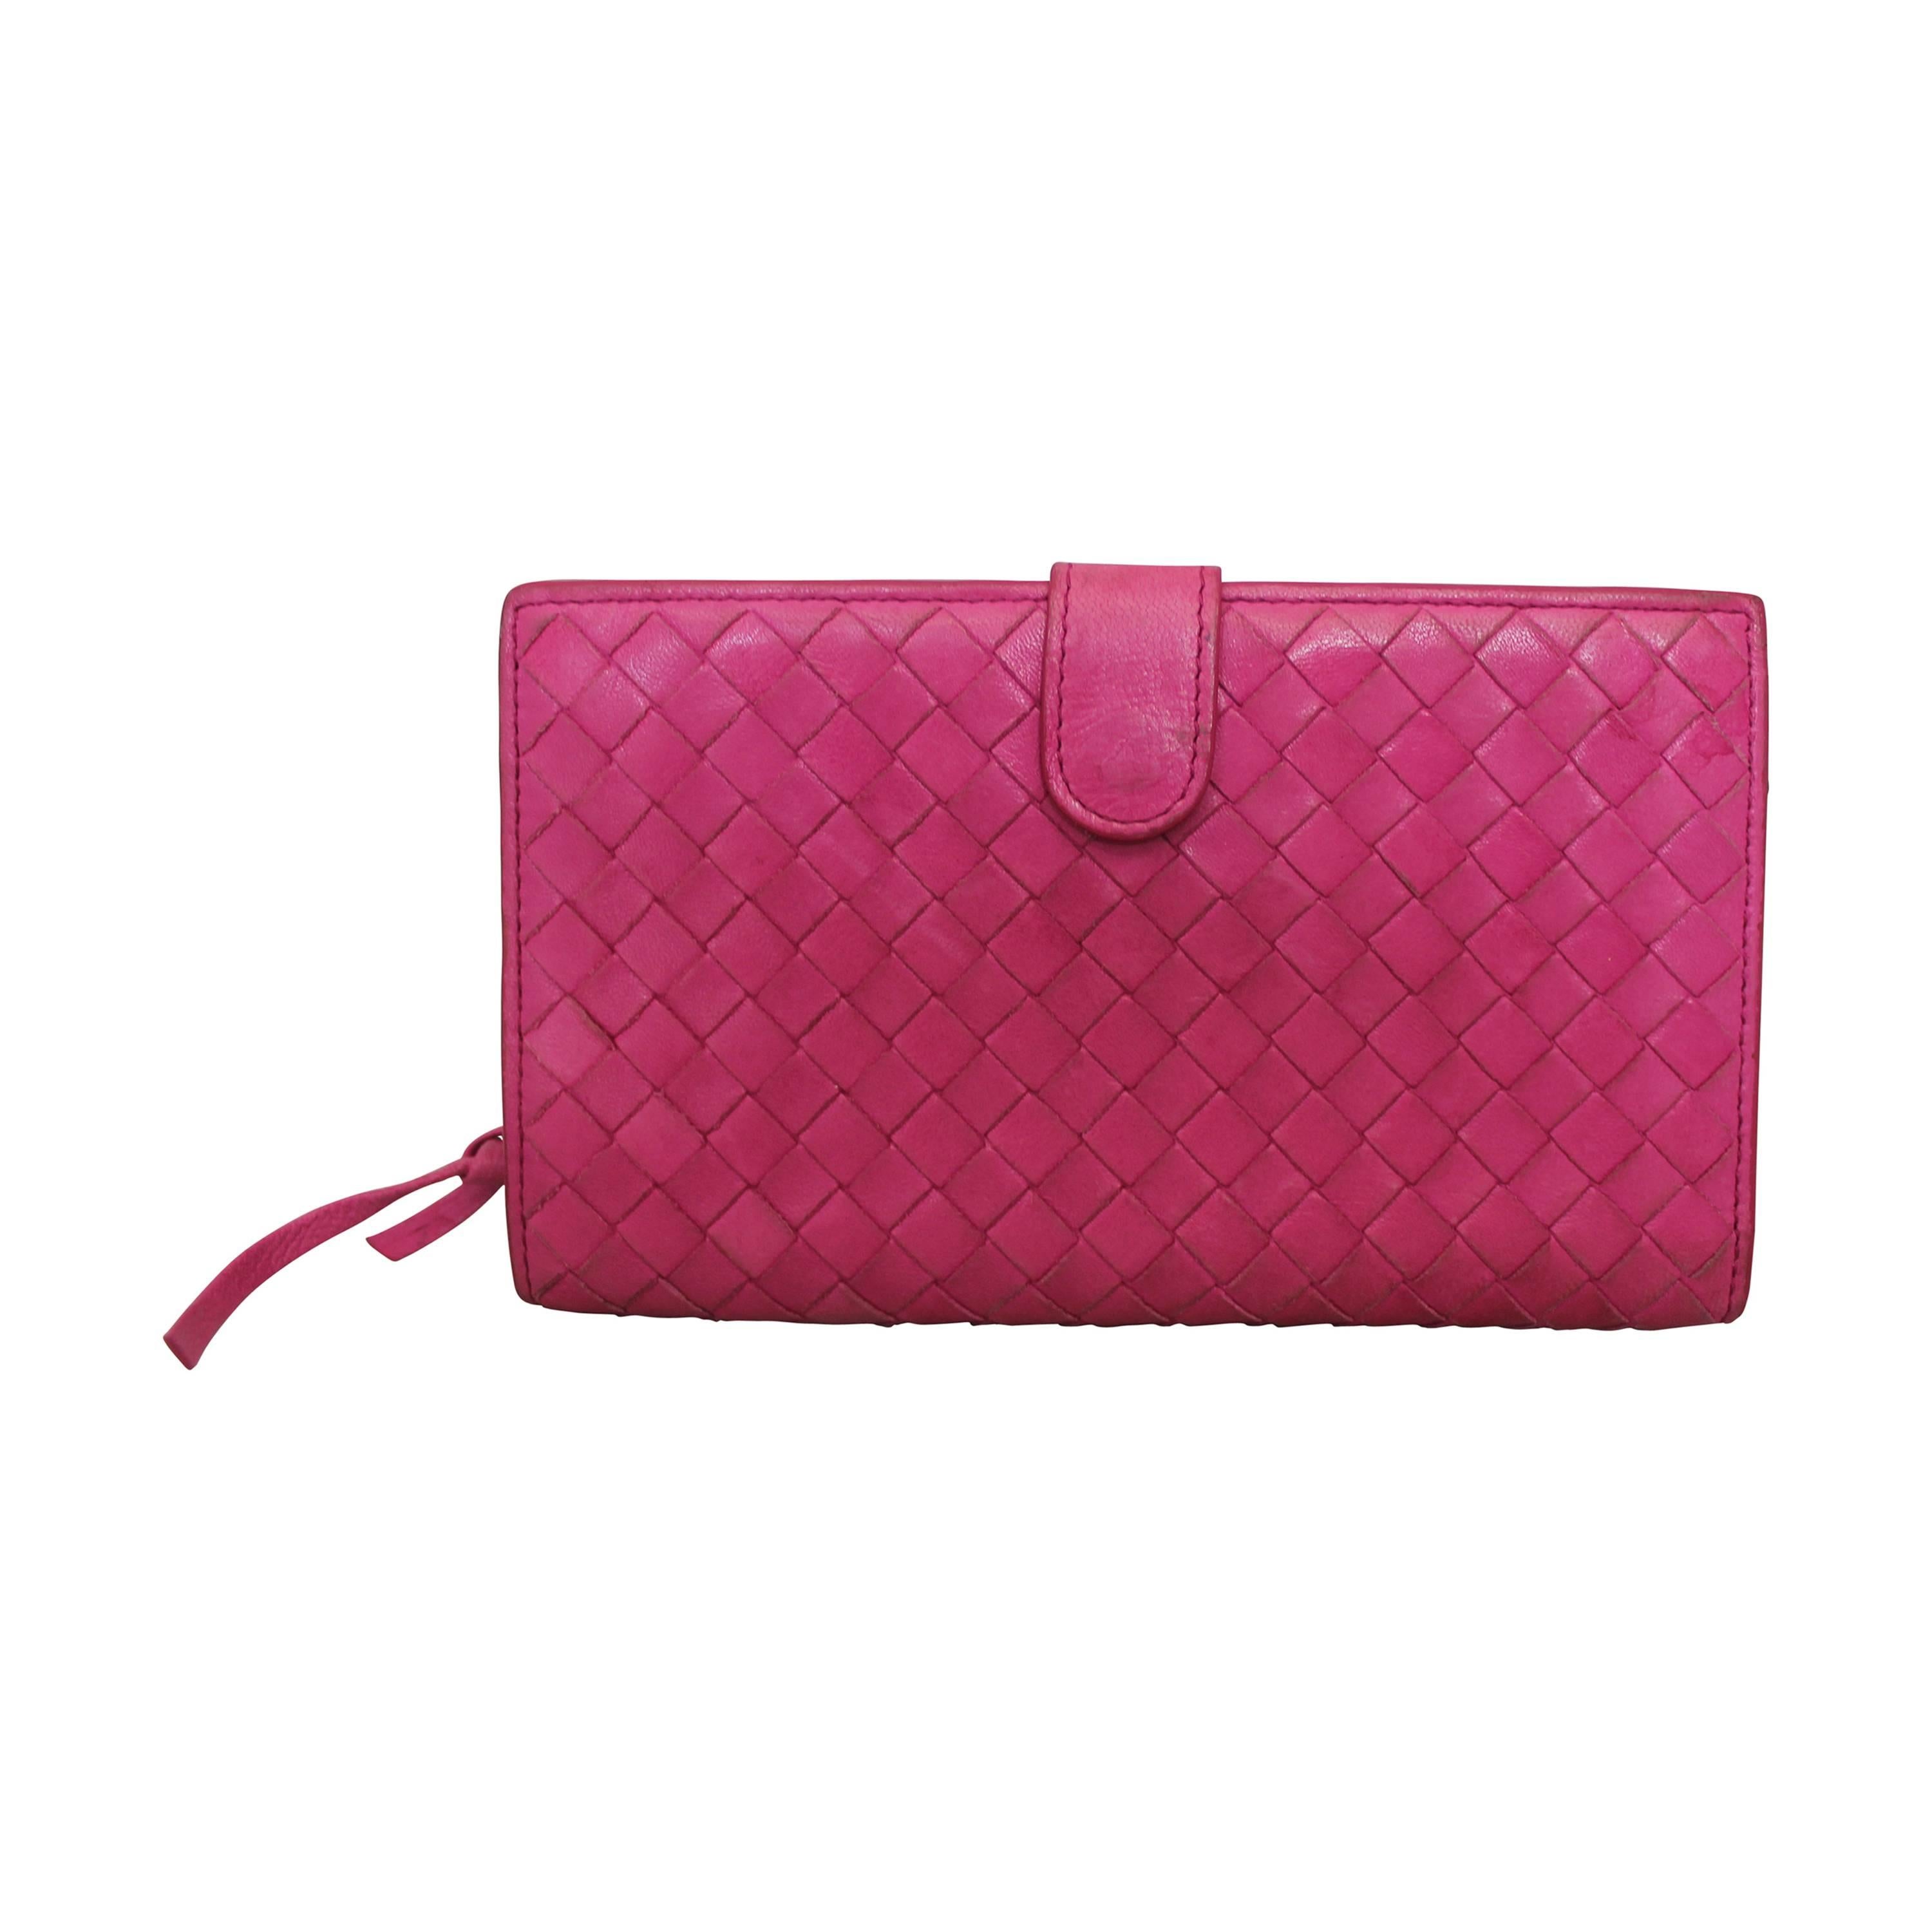 Bottega Veneta Pink Woven Leather Wallet